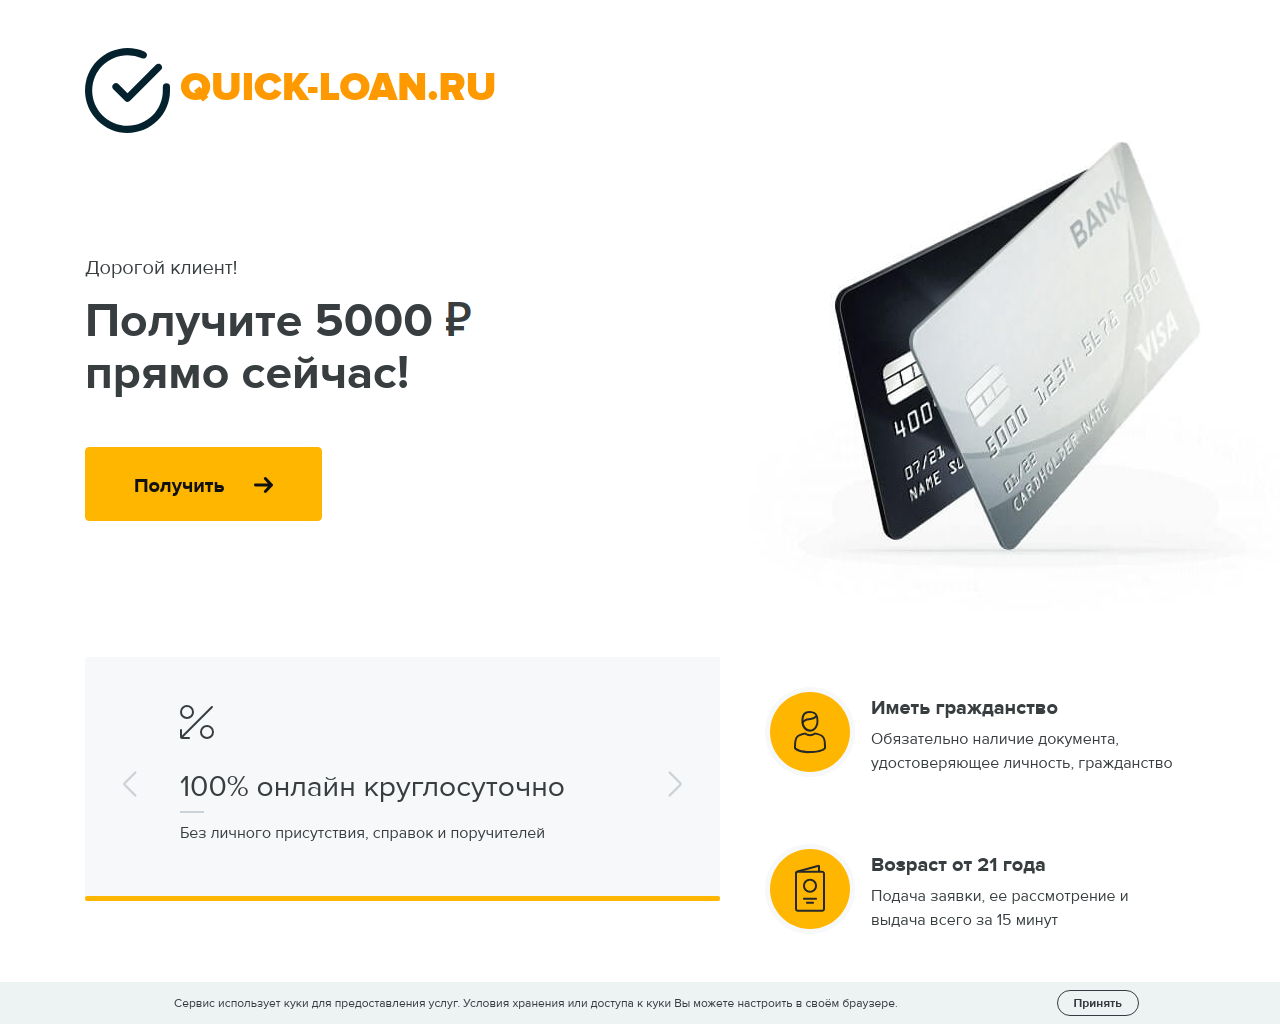 Изображение сайта quick-loan.ru в разрешении 1280x1024